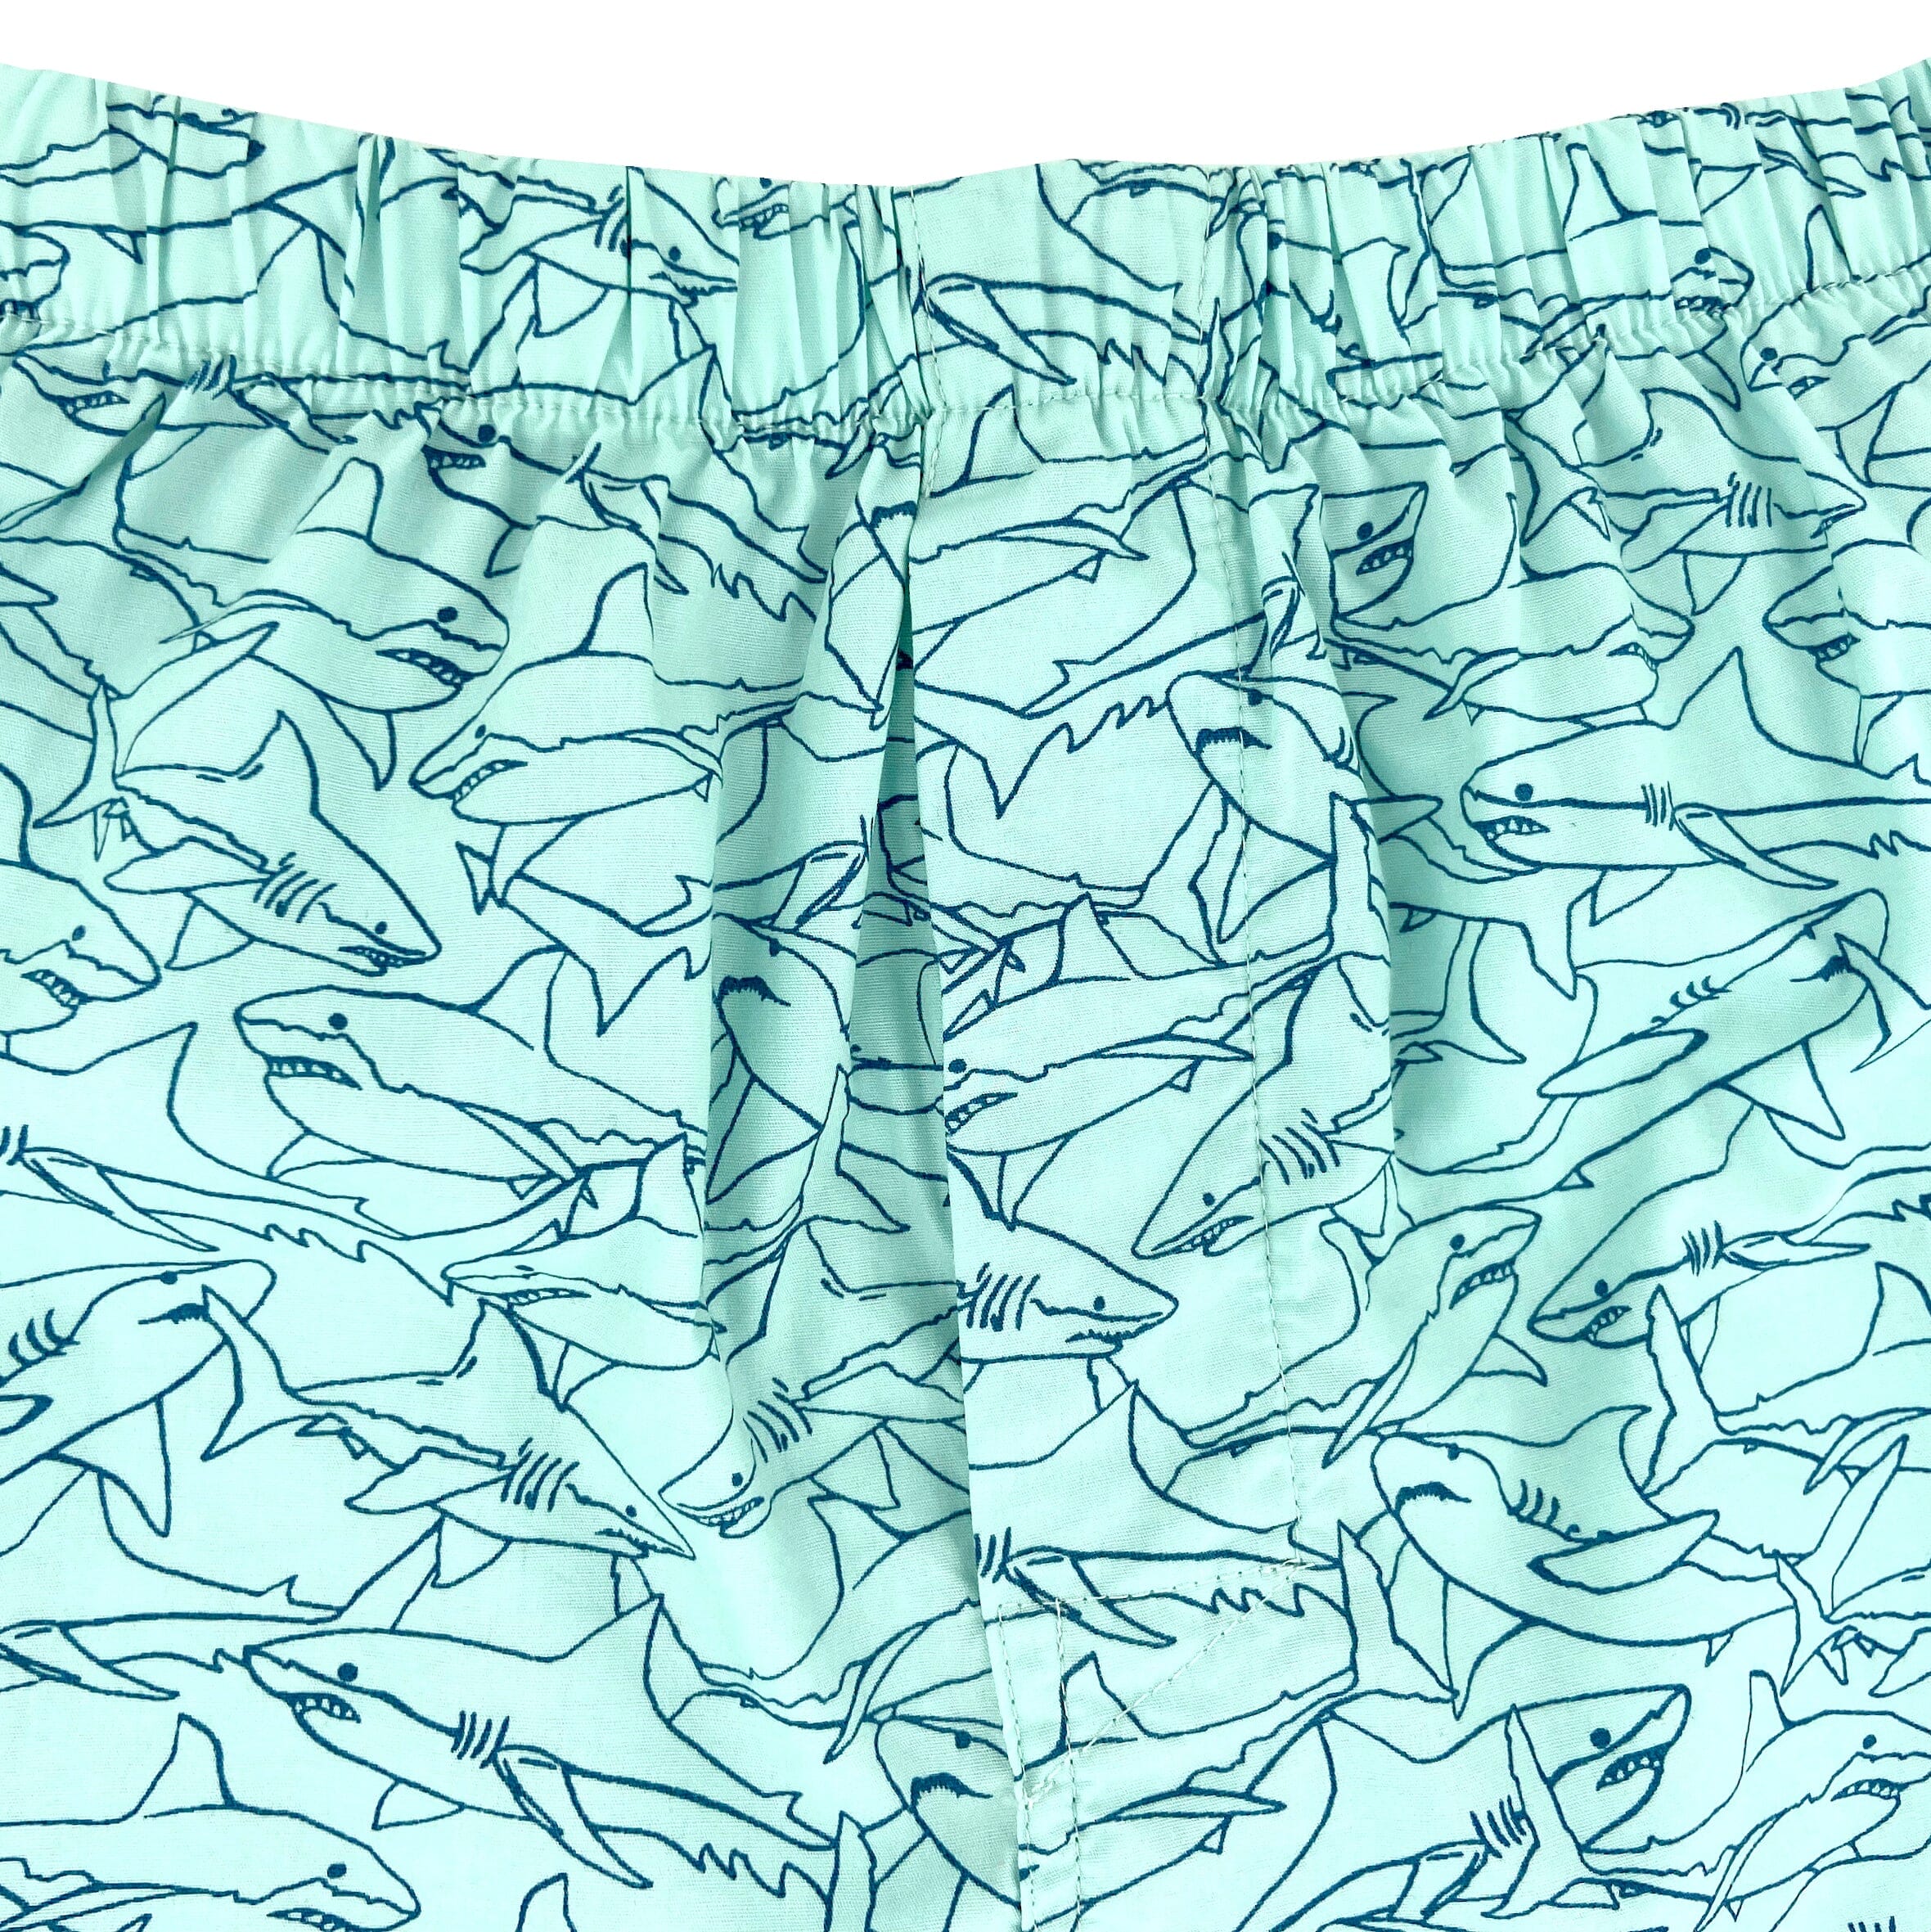 Great White Shark Collage Print Boxer Shorts for Men in Light Blue